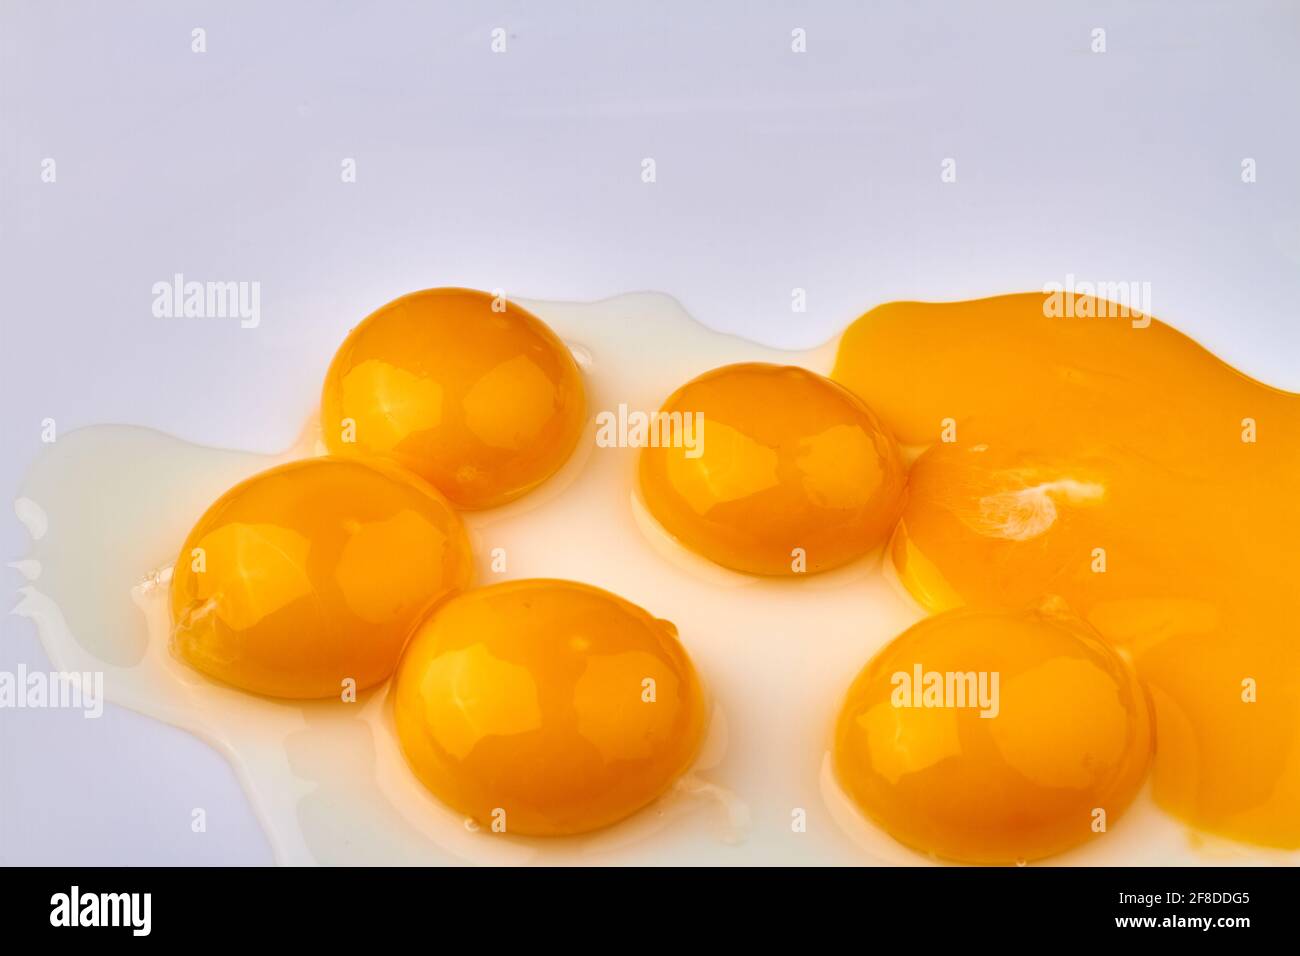 Gathering of yolks close-up. Close-up shiny chicken egg yolks. Stock Photo